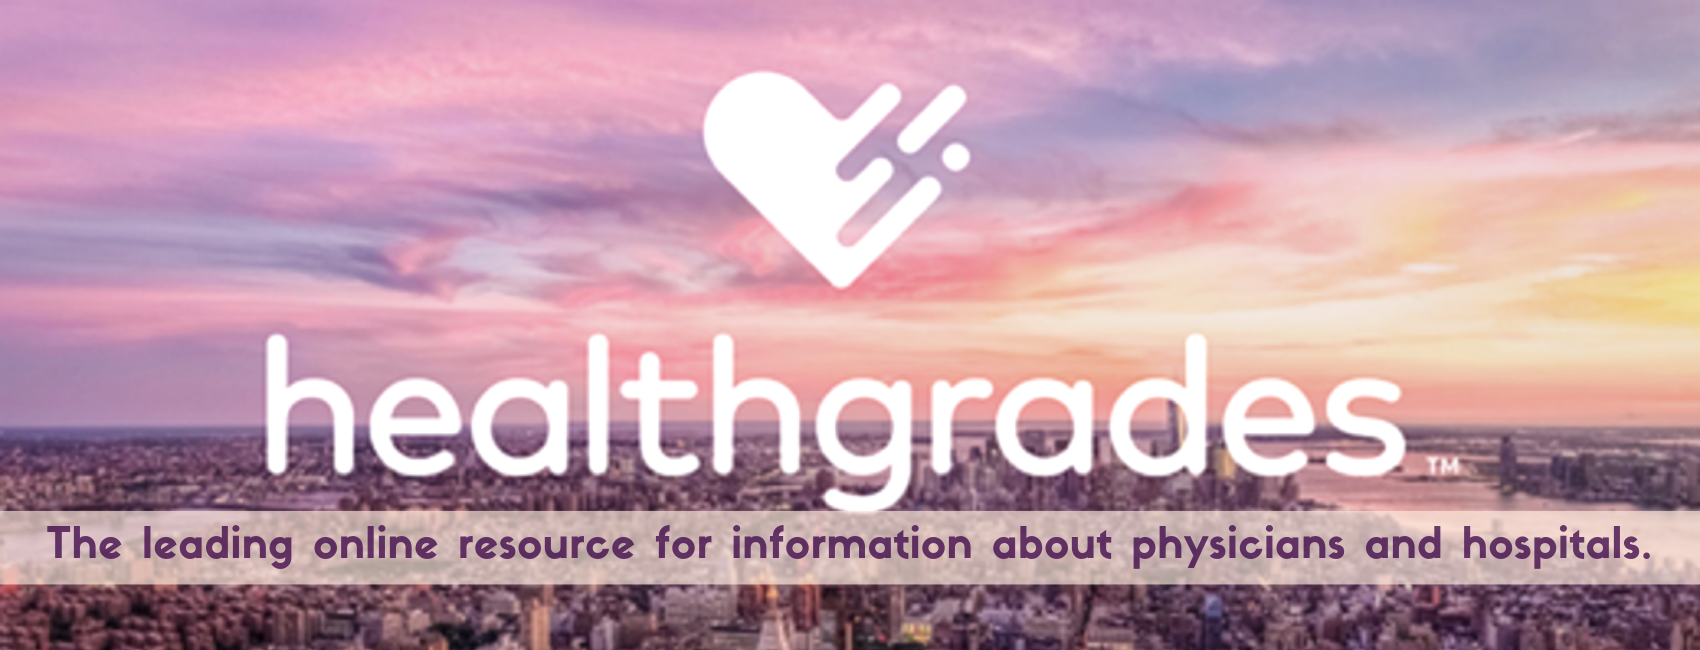 City landscape with Healthgrades logo